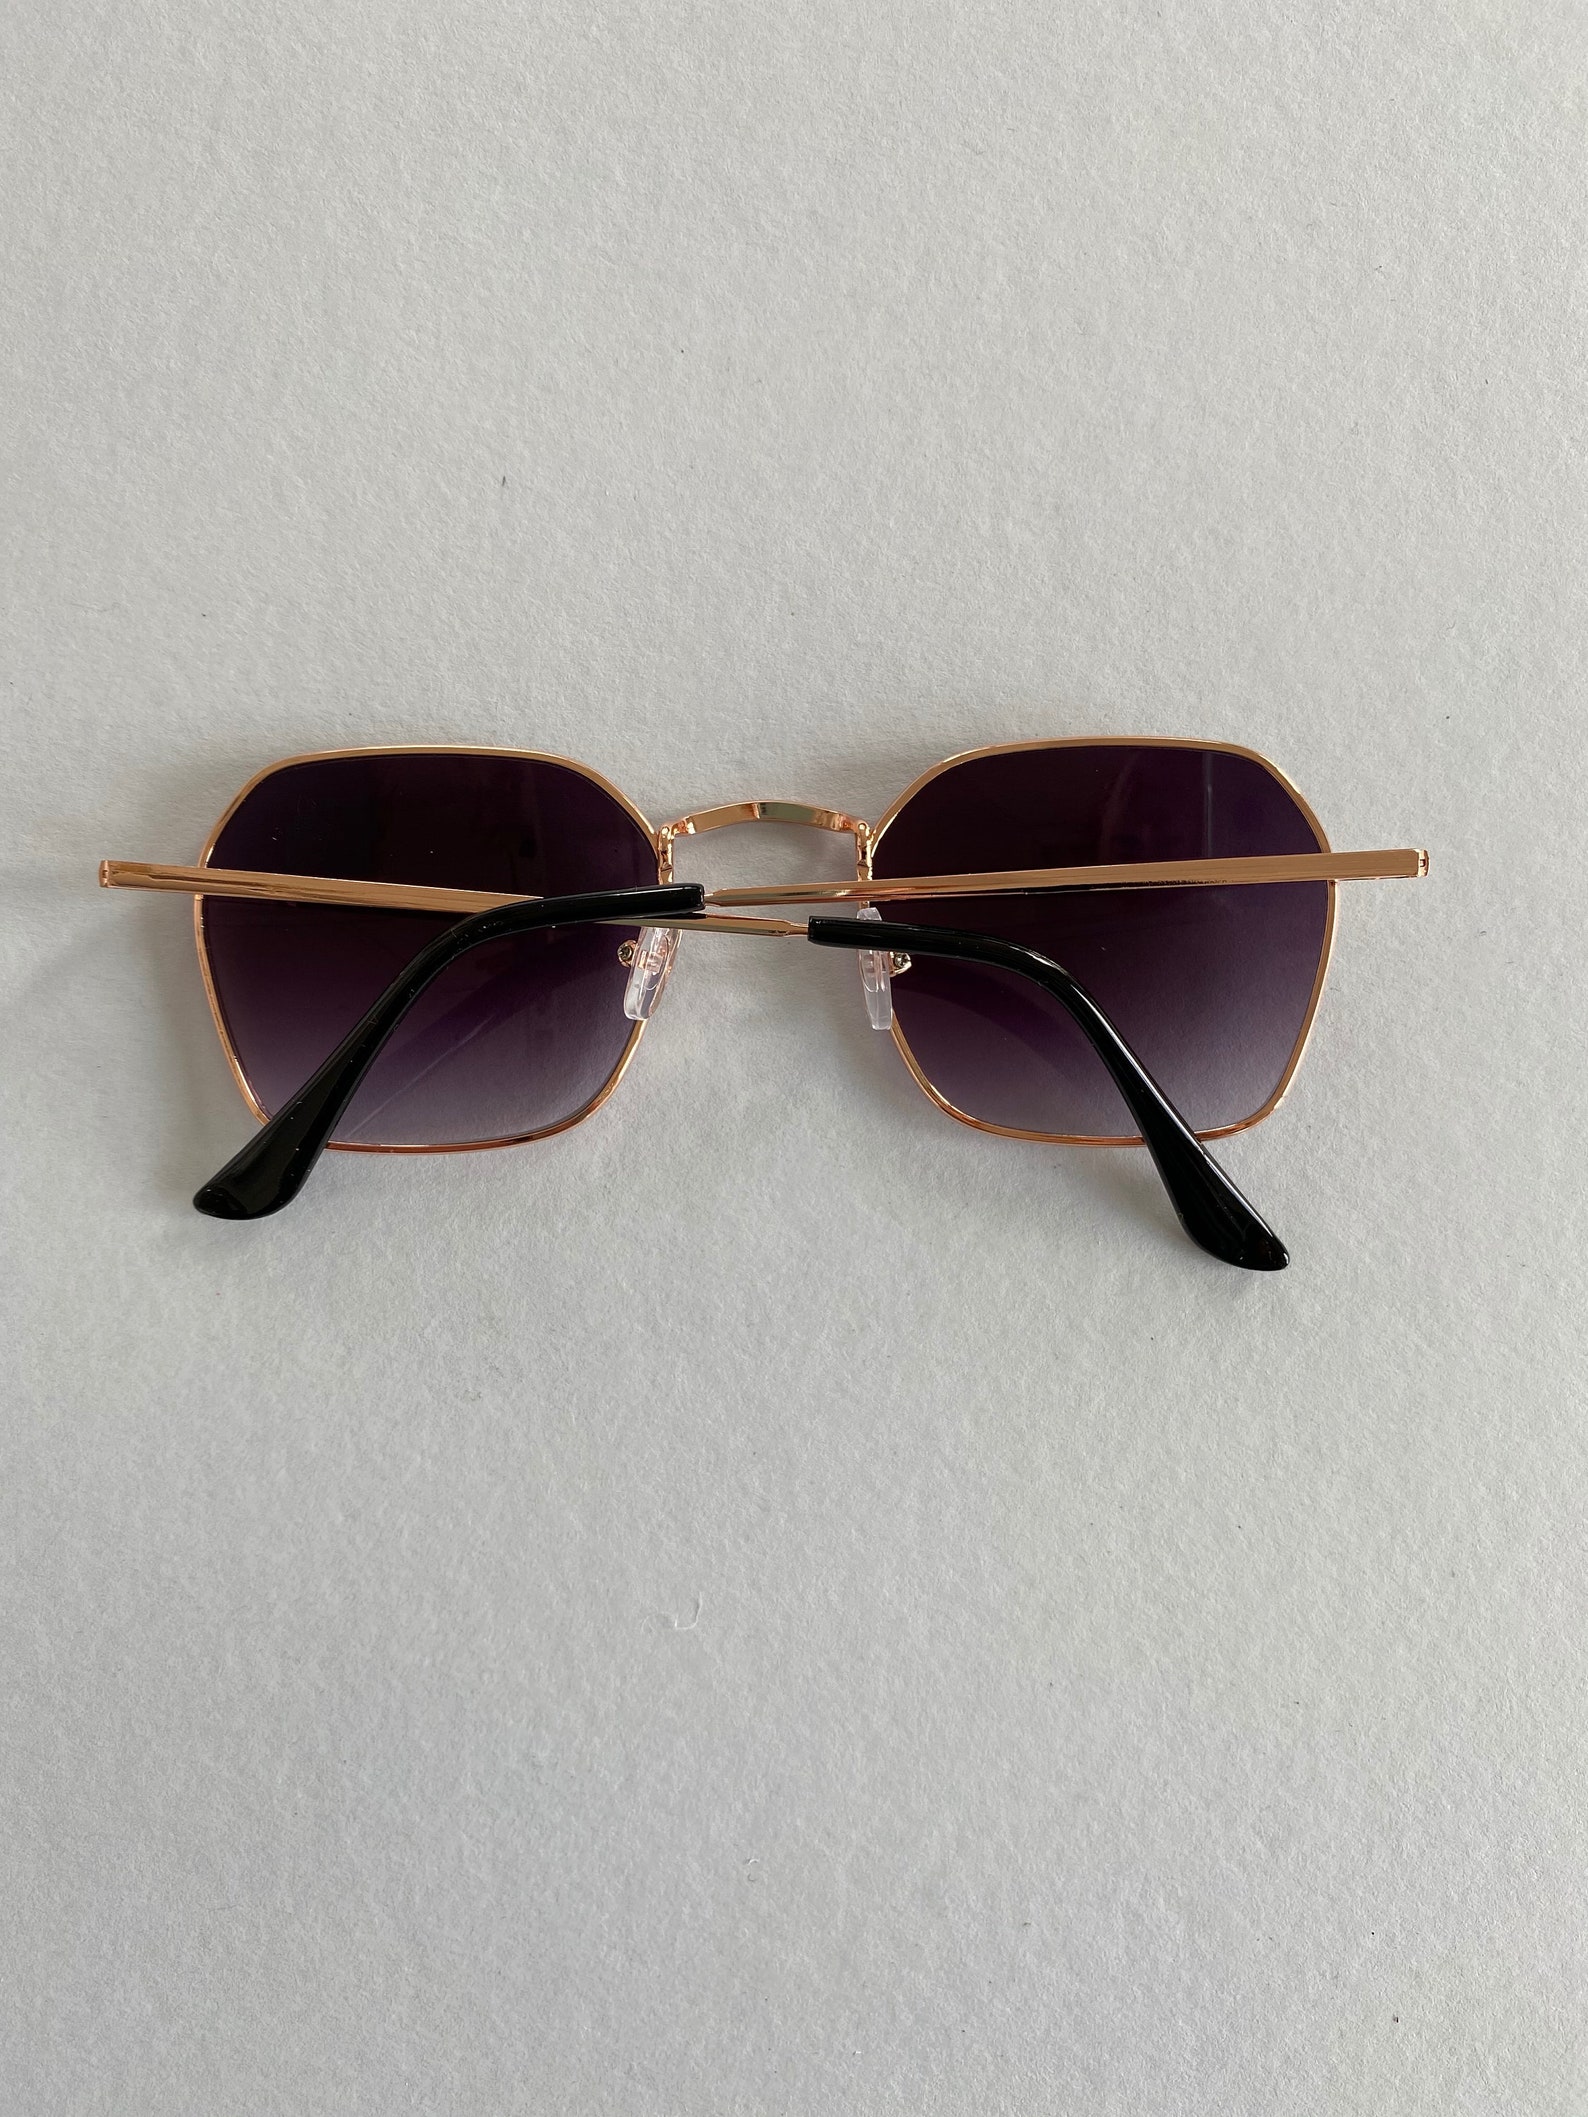 Vintage Aviator Style Sunglasses Classic Black - Etsy